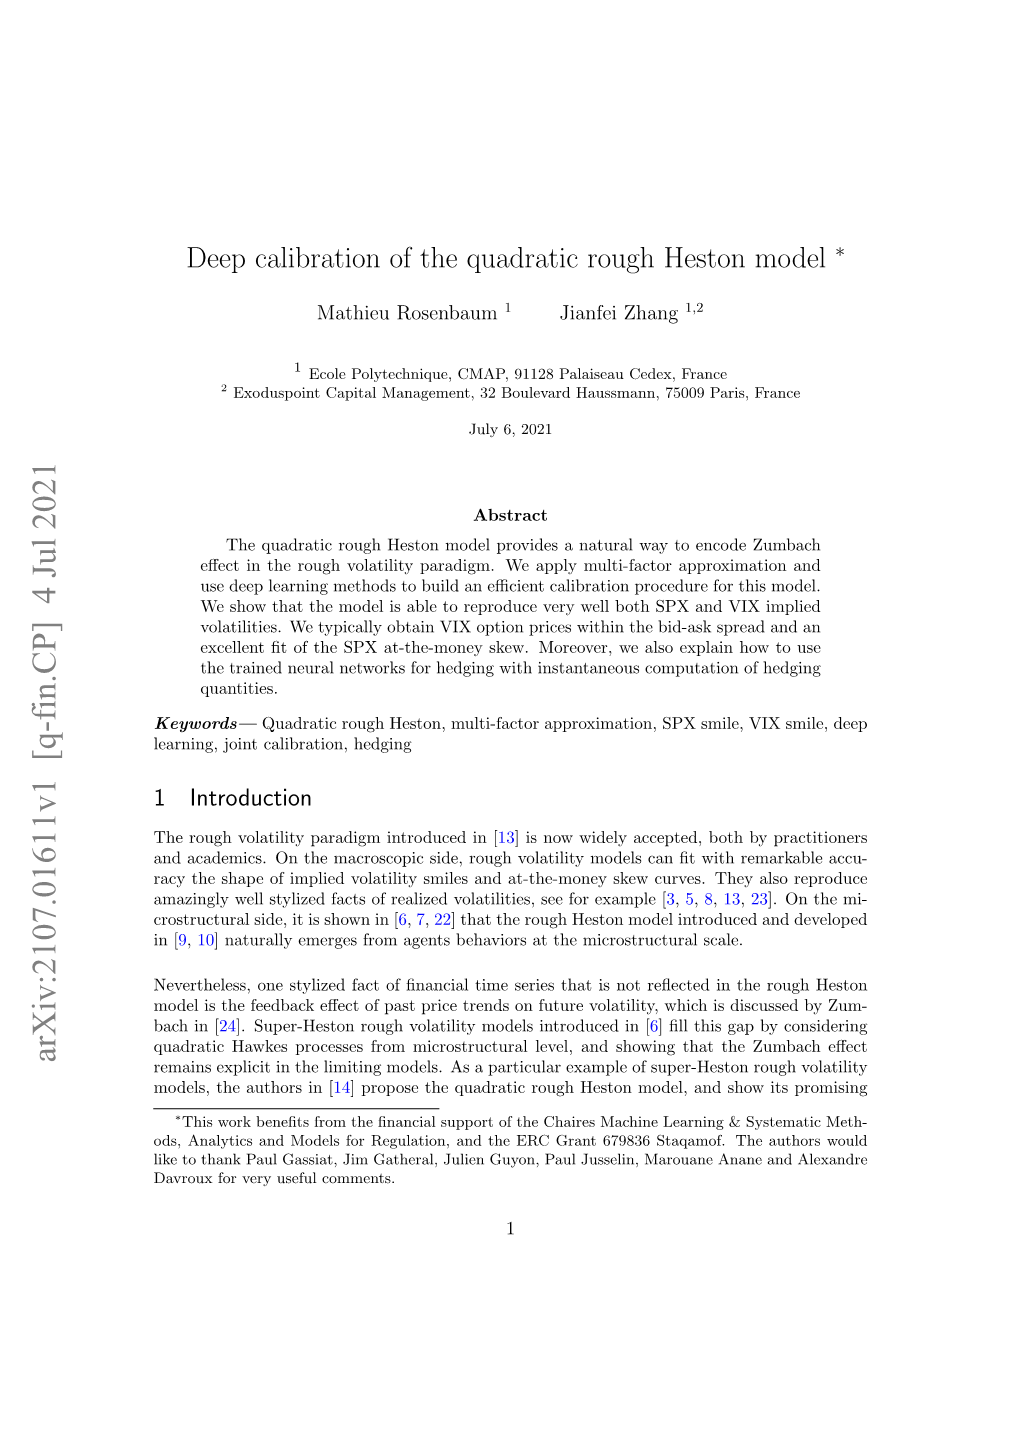 Deep Calibration of the Quadratic Rough Heston Model ∗